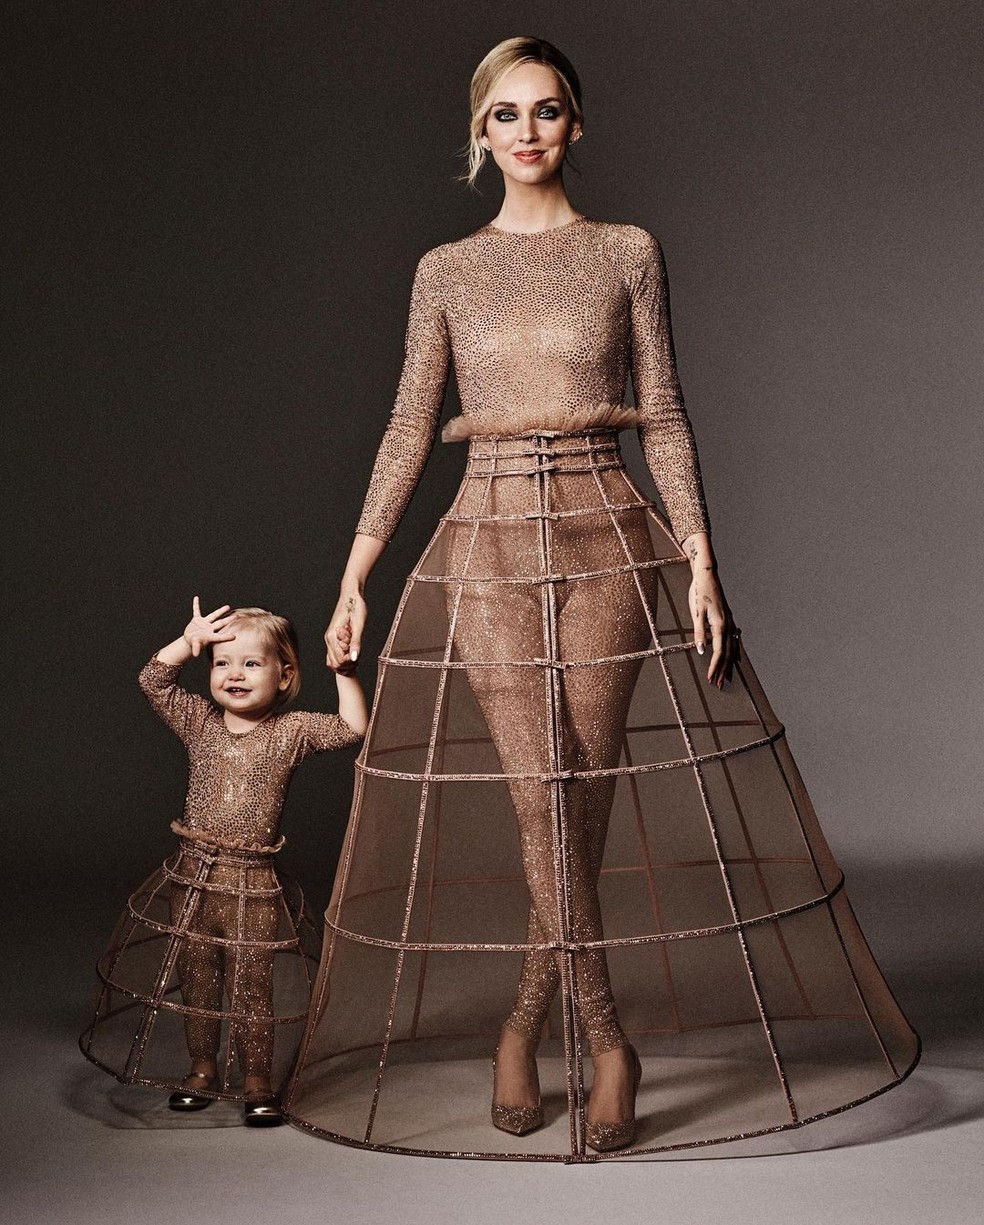 Chiara Ferragni e Vittoria posam com look Dior — Foto: Instagram